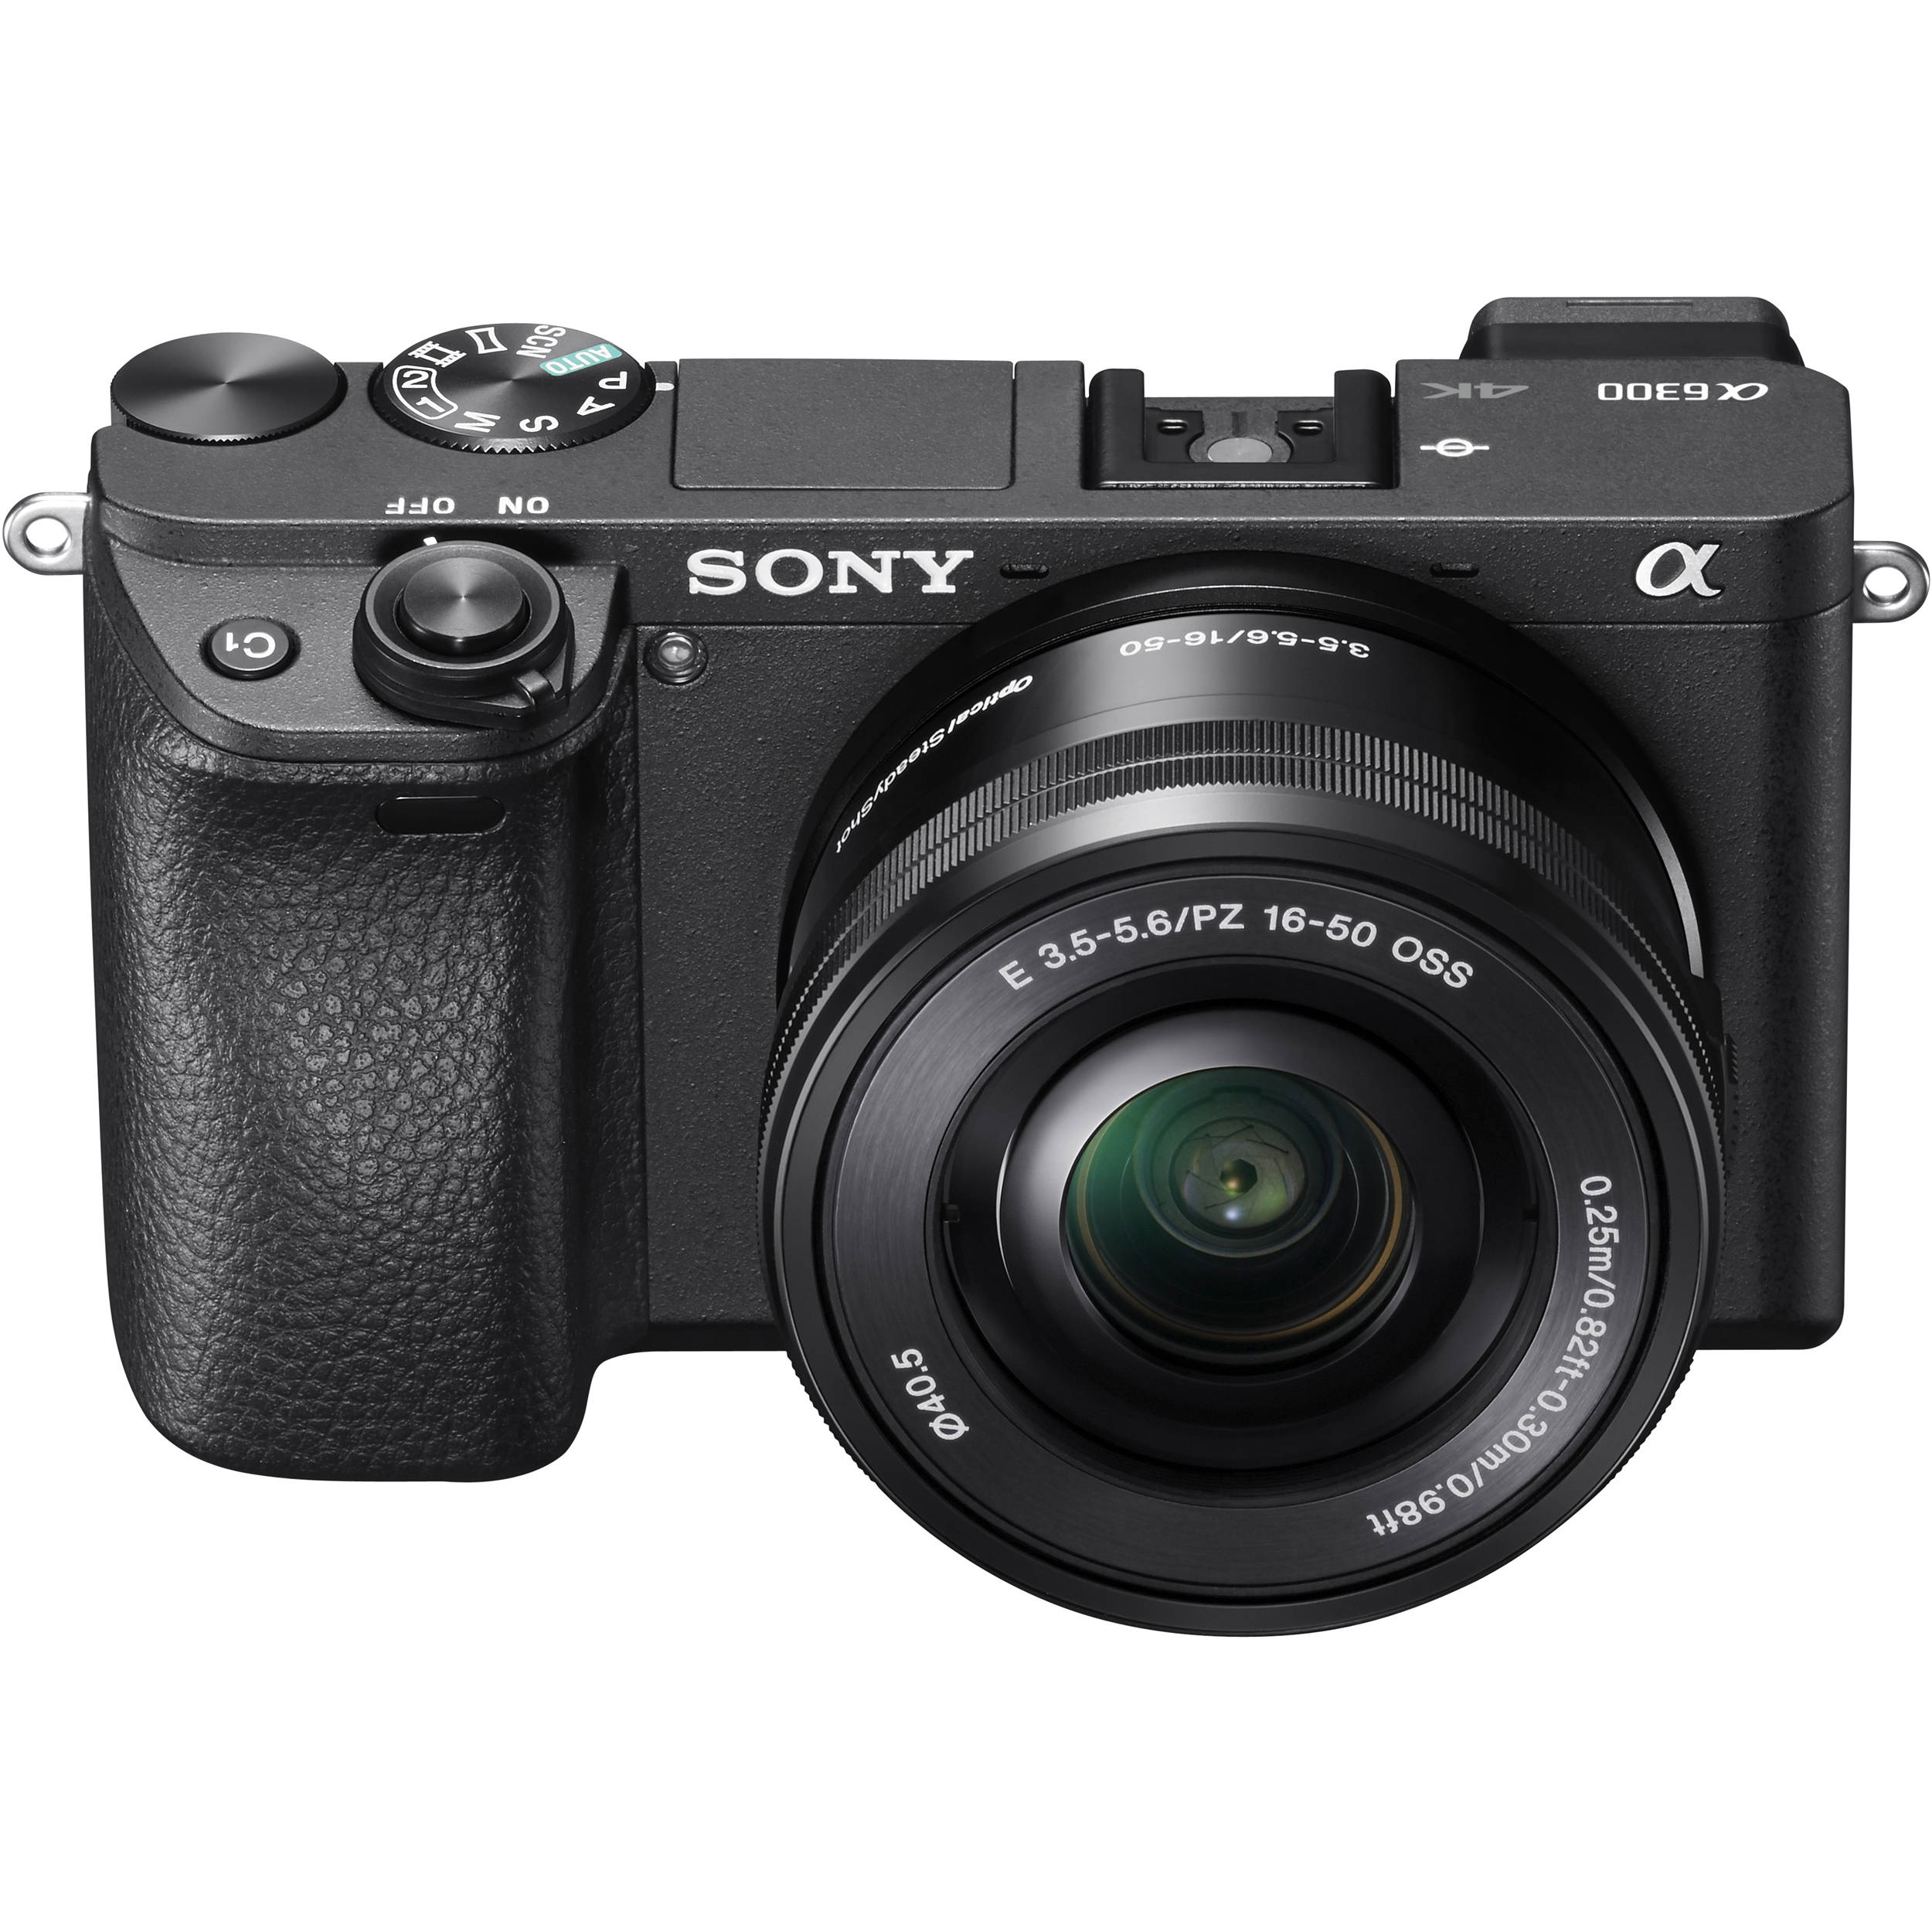 Sony Alpha a6300 Mirrorless Digital Camera with 16-50mm Lens (Black).3